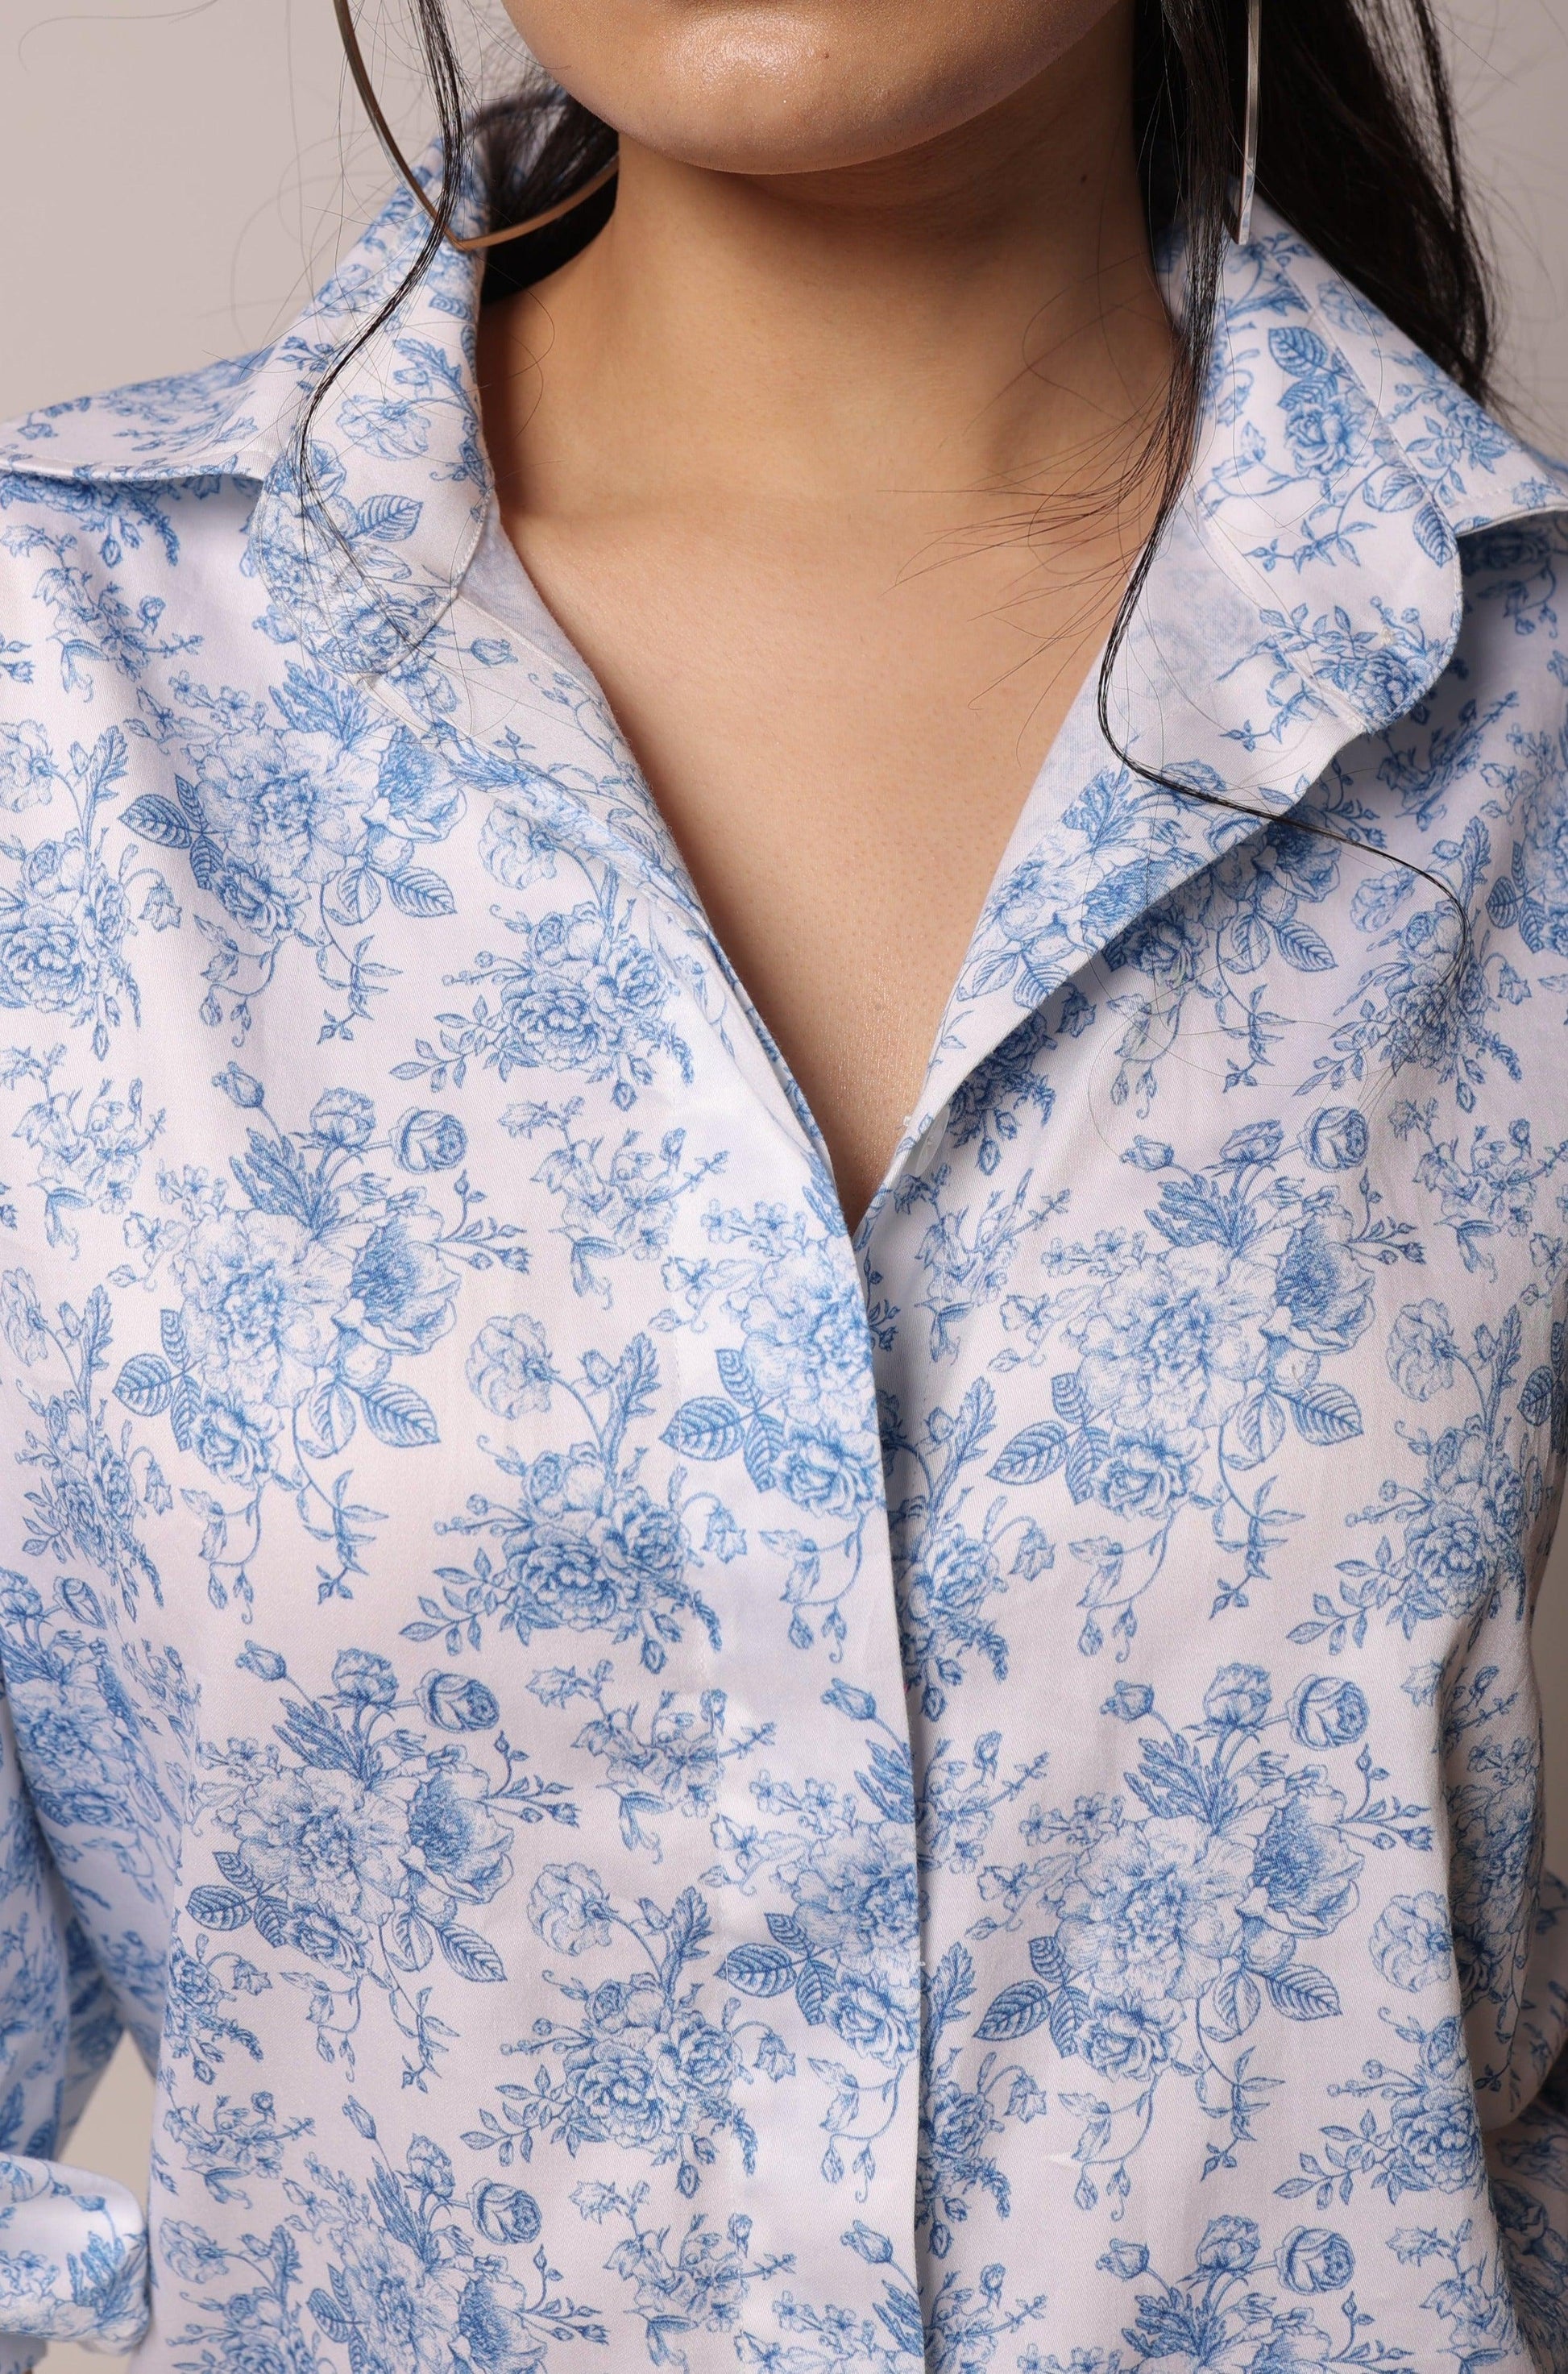 Blue Garden Shirt - Ackee